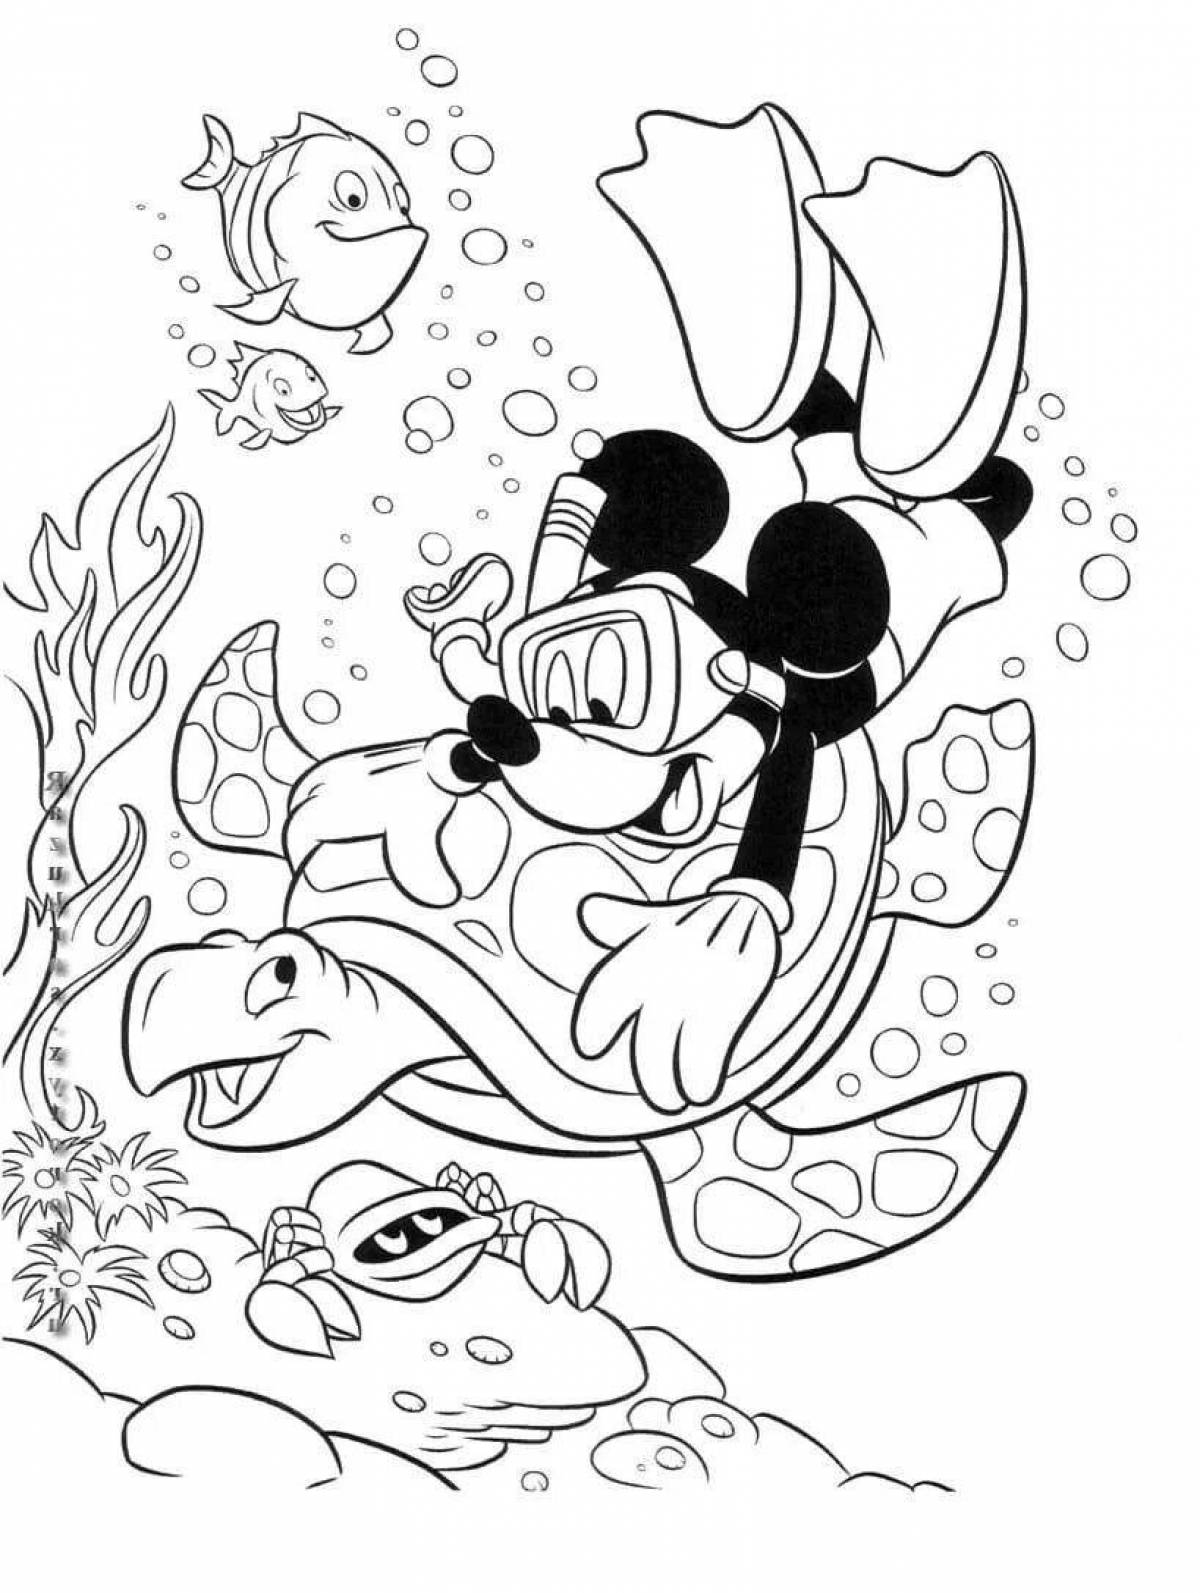 Disney quirky coloring book